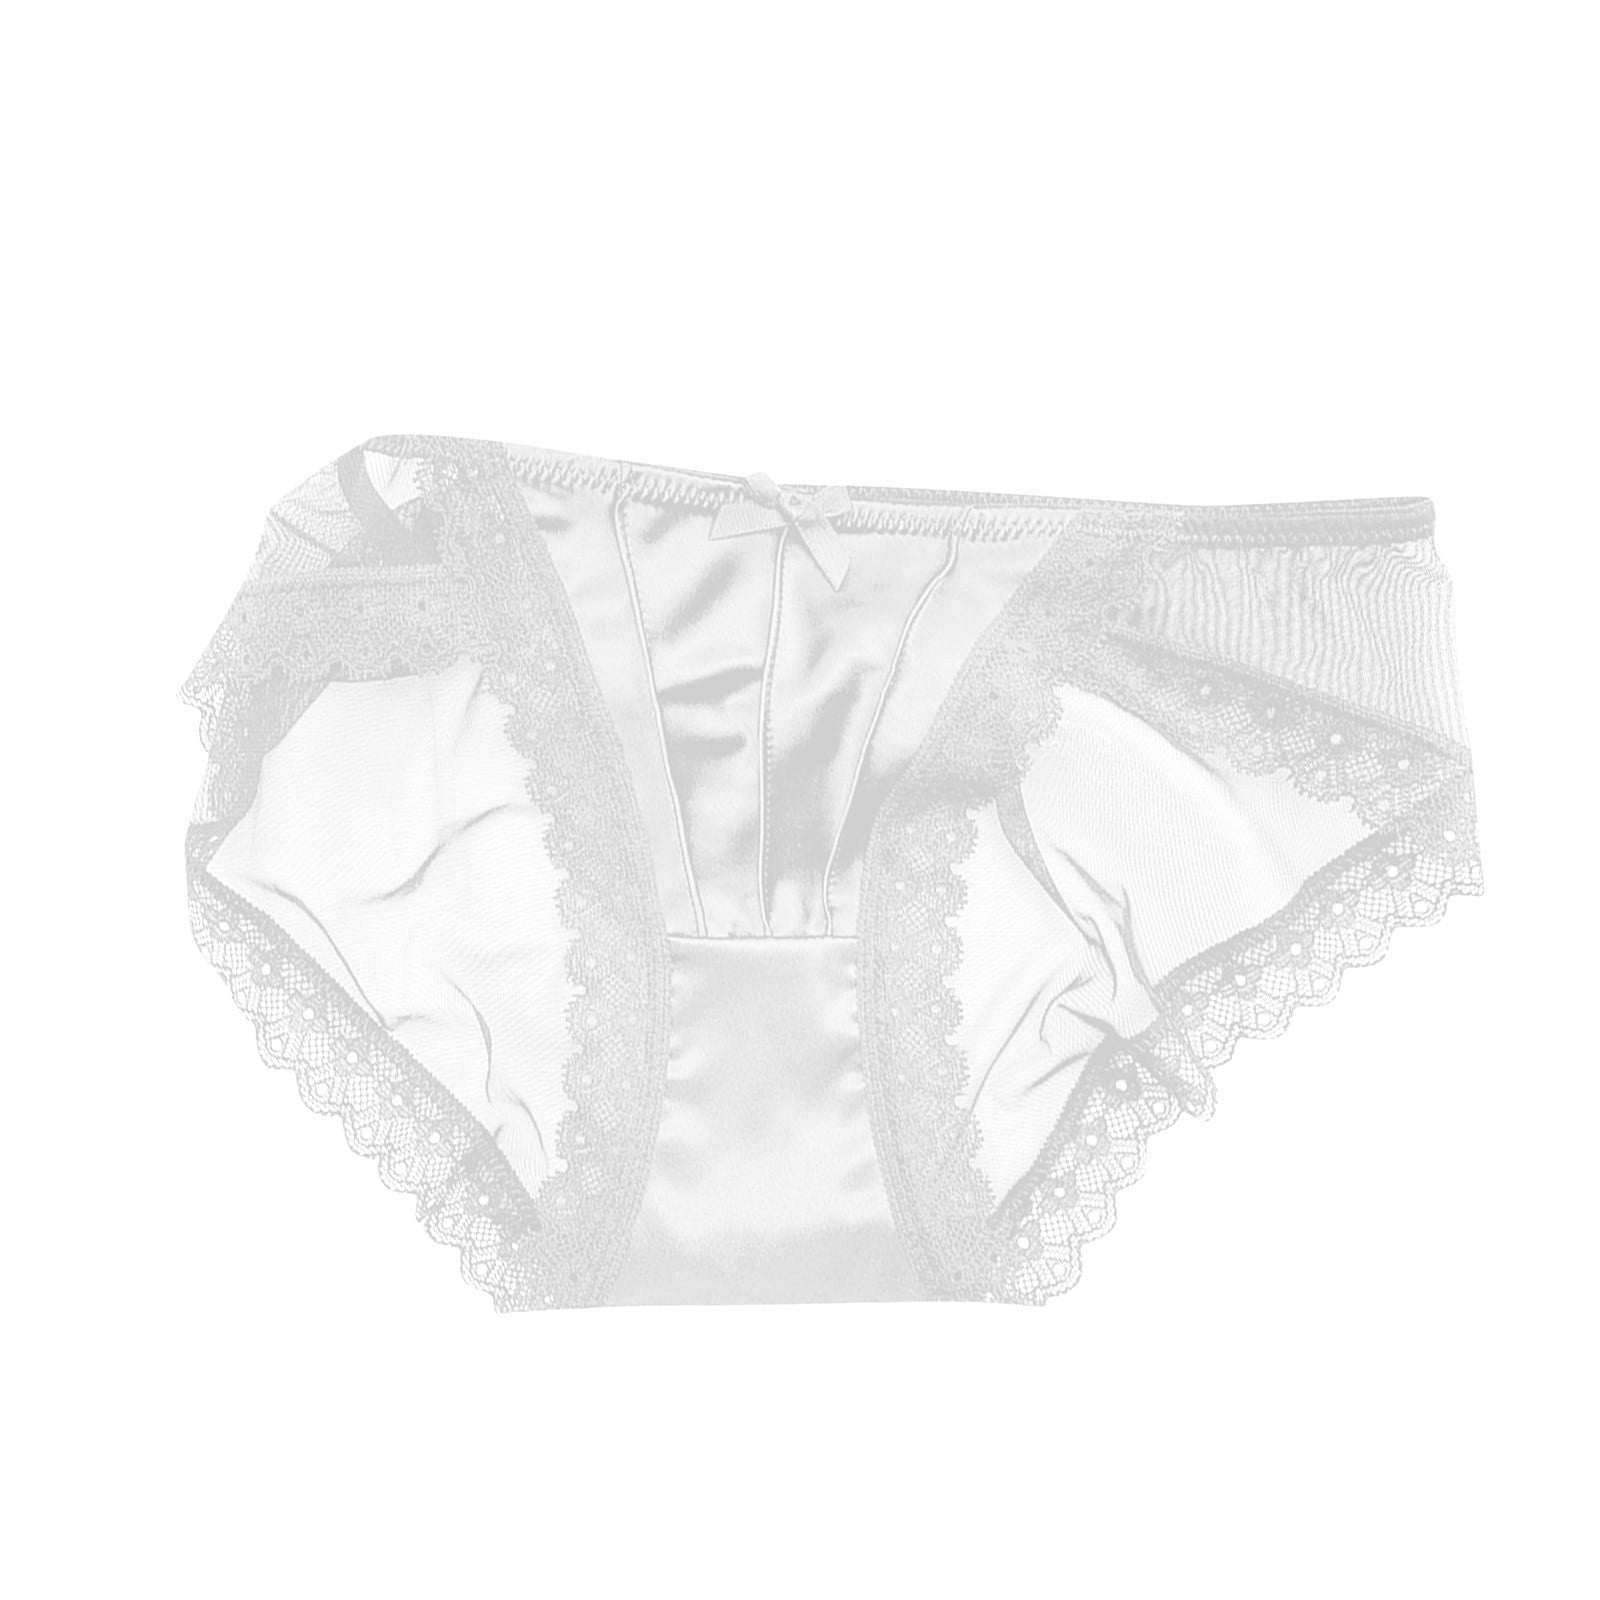 Hfyihgf Women's Vintage Satin Frilly Lace French Knickers Briefs Panties  Soft Lace Cheeky Bikini Underwear Seamless Sexy Mesh Briefs M 